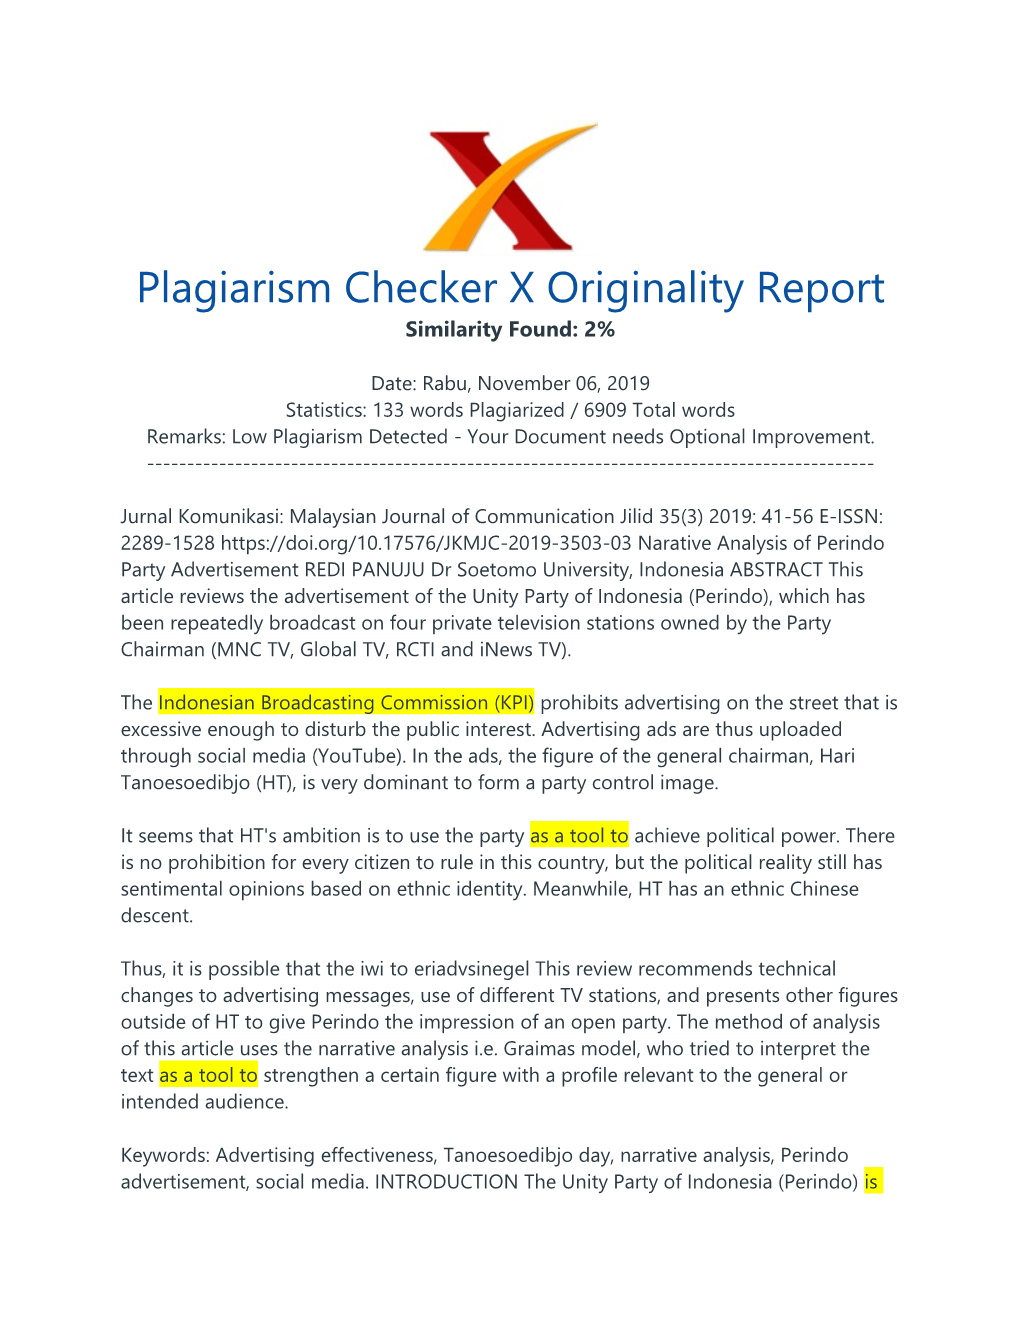 Plagiarism Checker X Originality Report Similarity Found: 2%